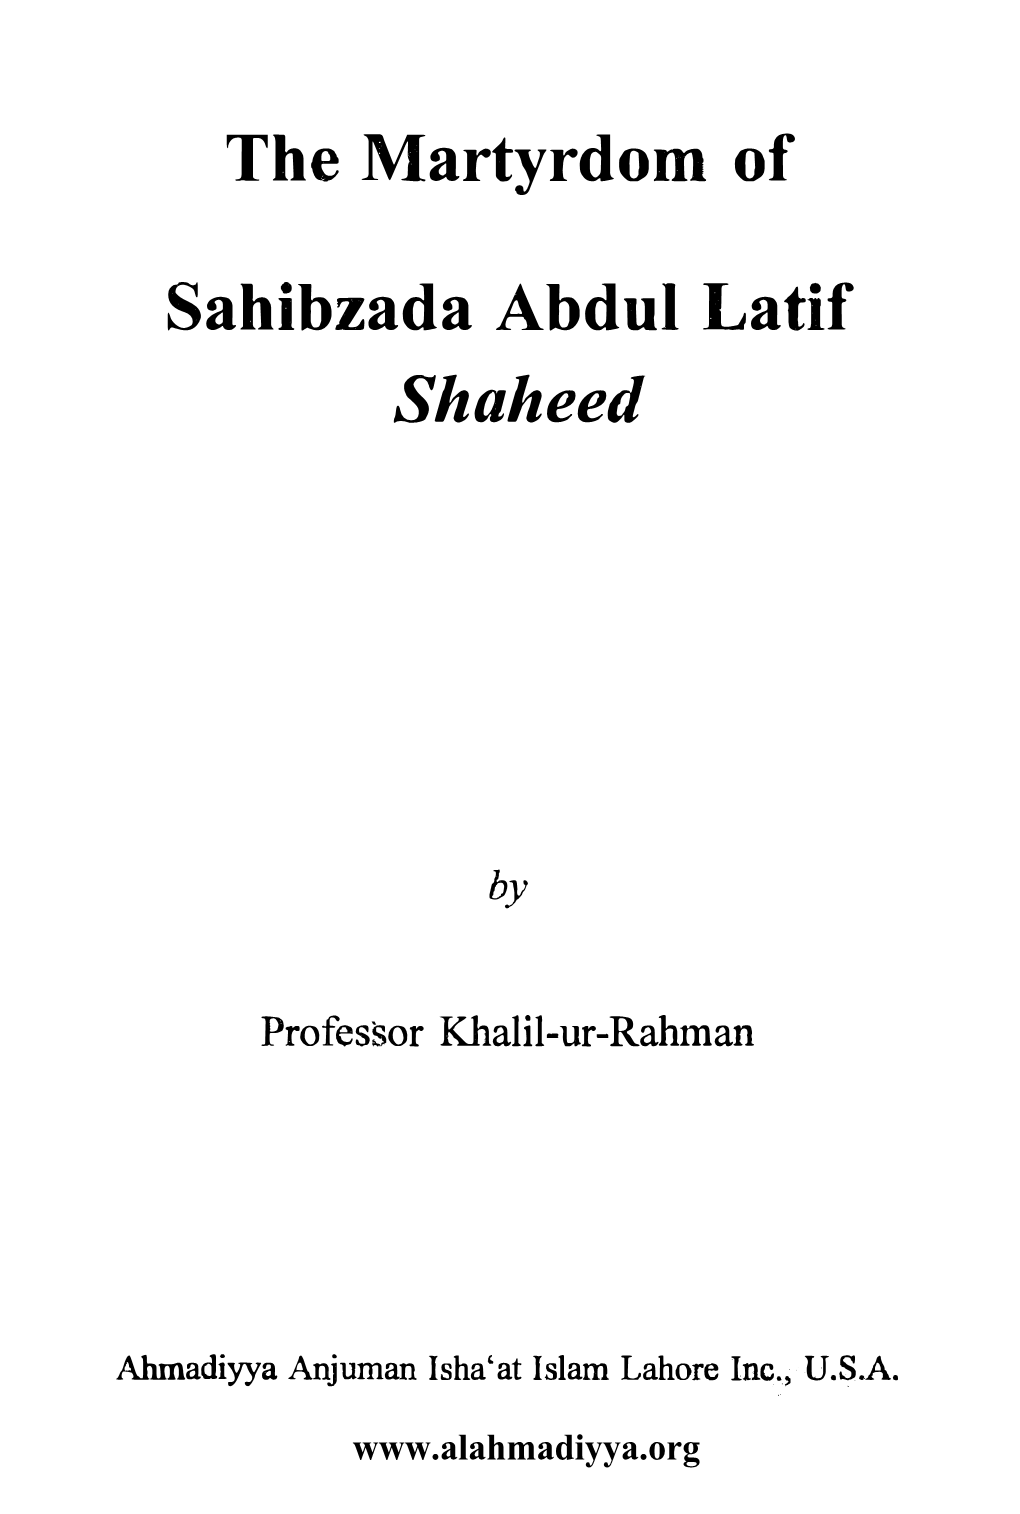 The Martyrdom of Sahibzada Abdul Latif Shaheed